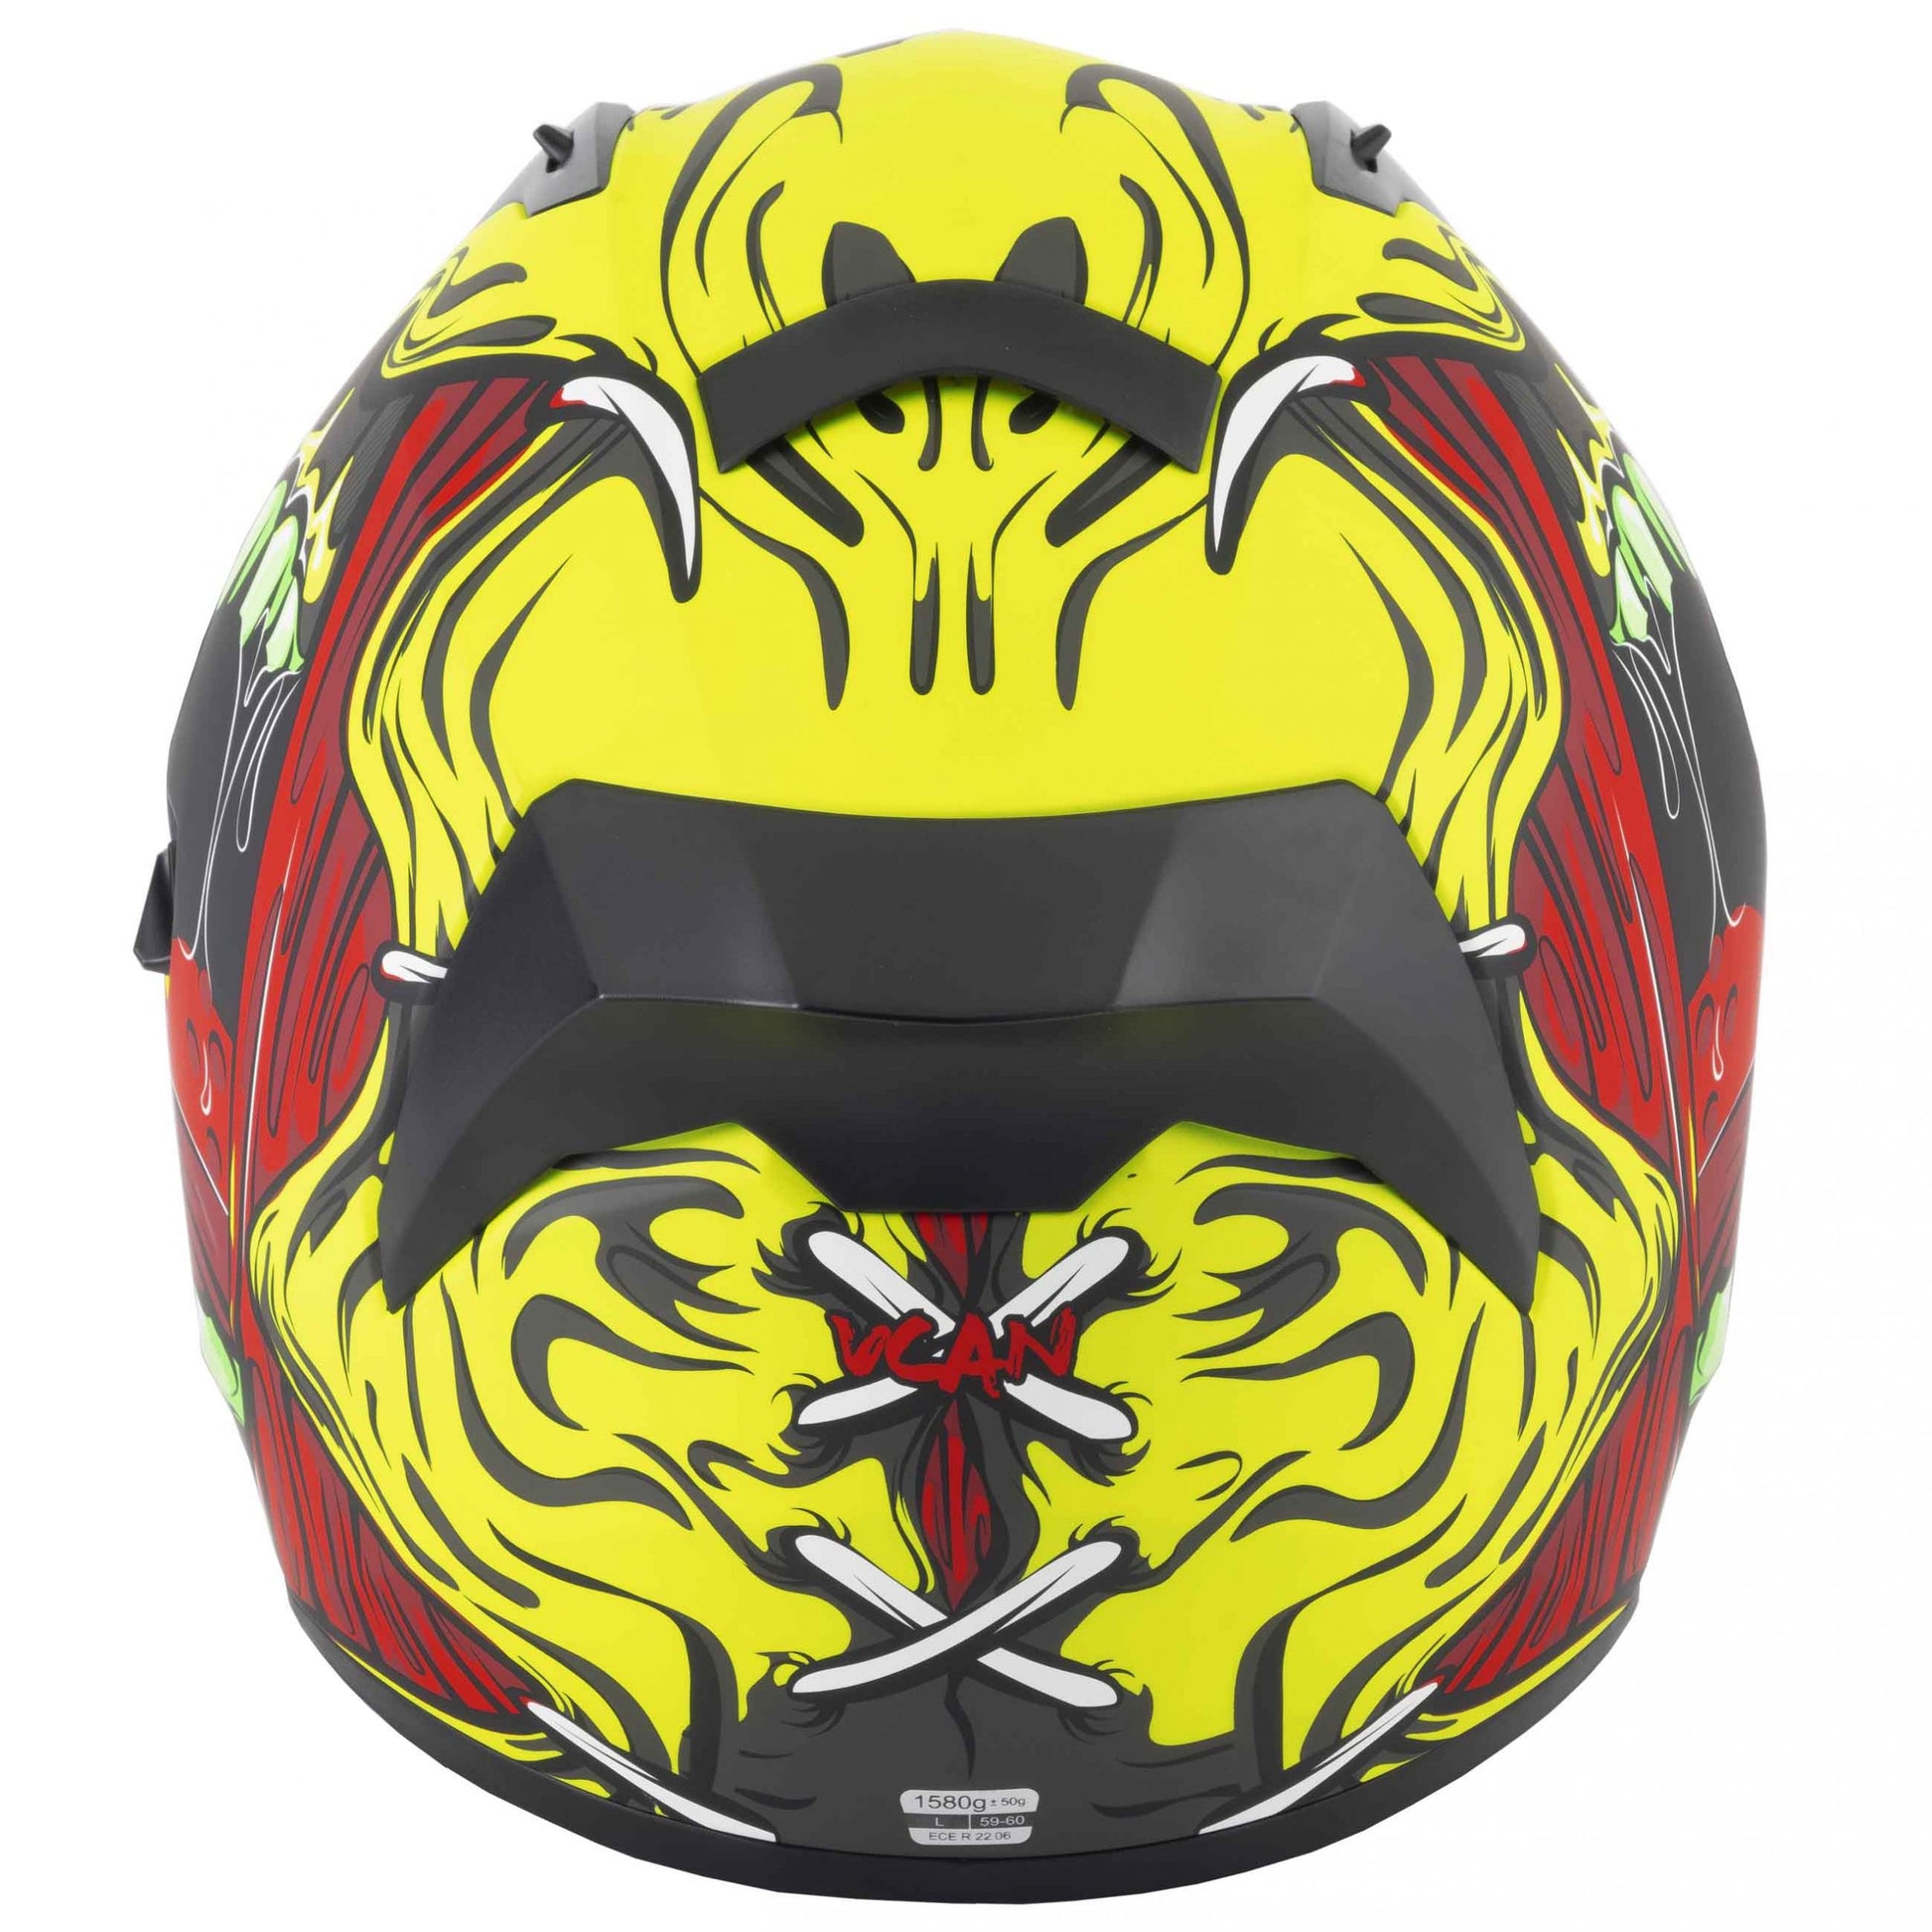 Riderwear |VCAN H128 Full Face Helmet - Titan Wild